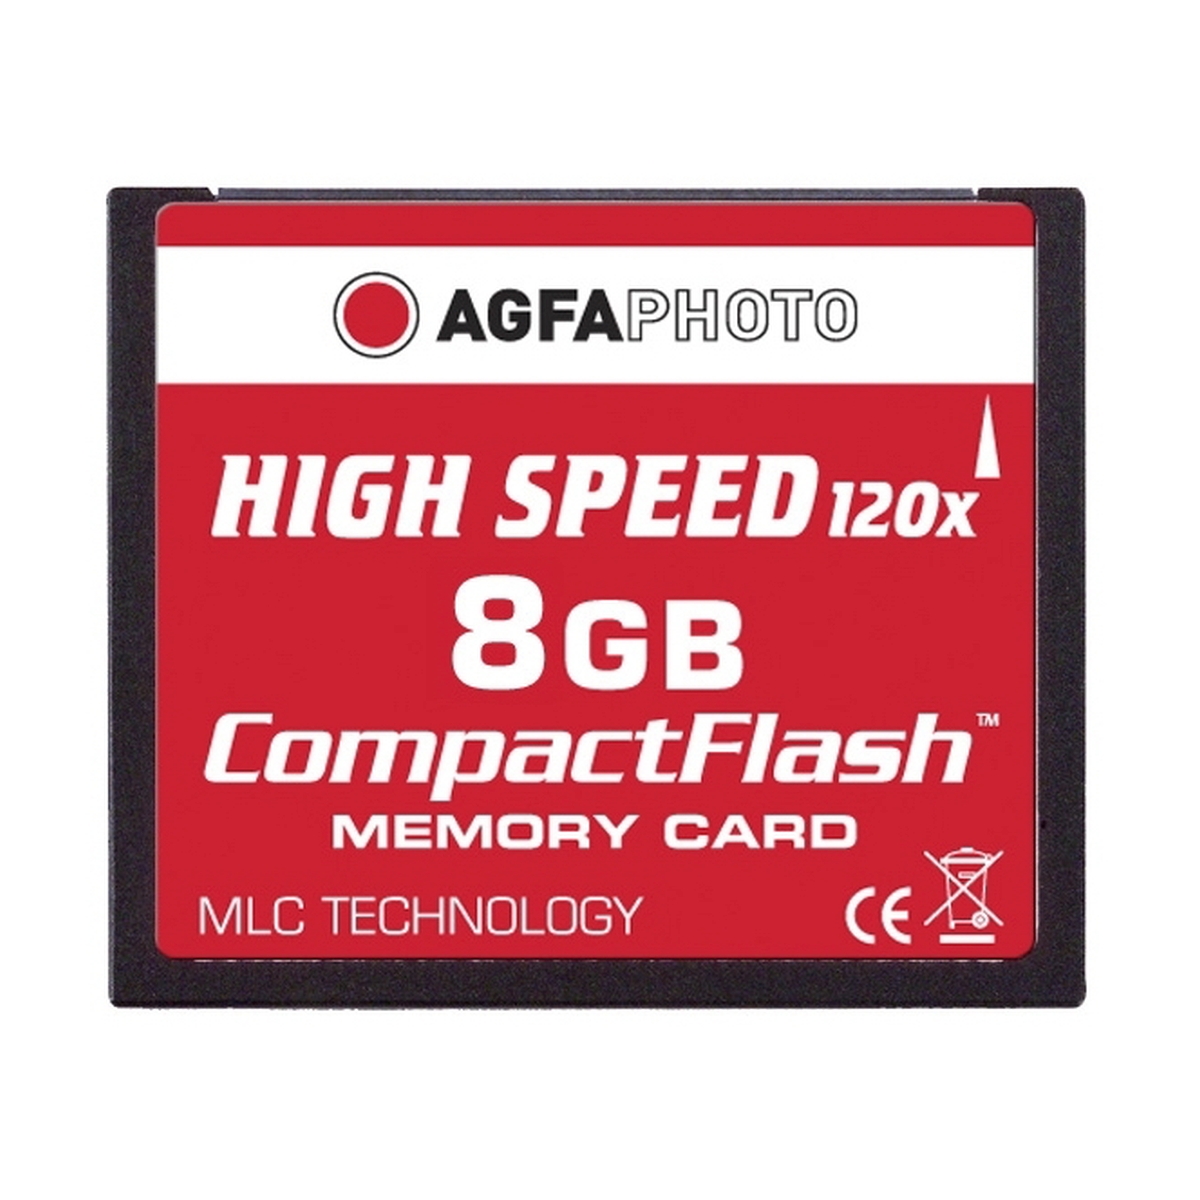 AgfaPhoto 8 GB Compact Flash Highspeed